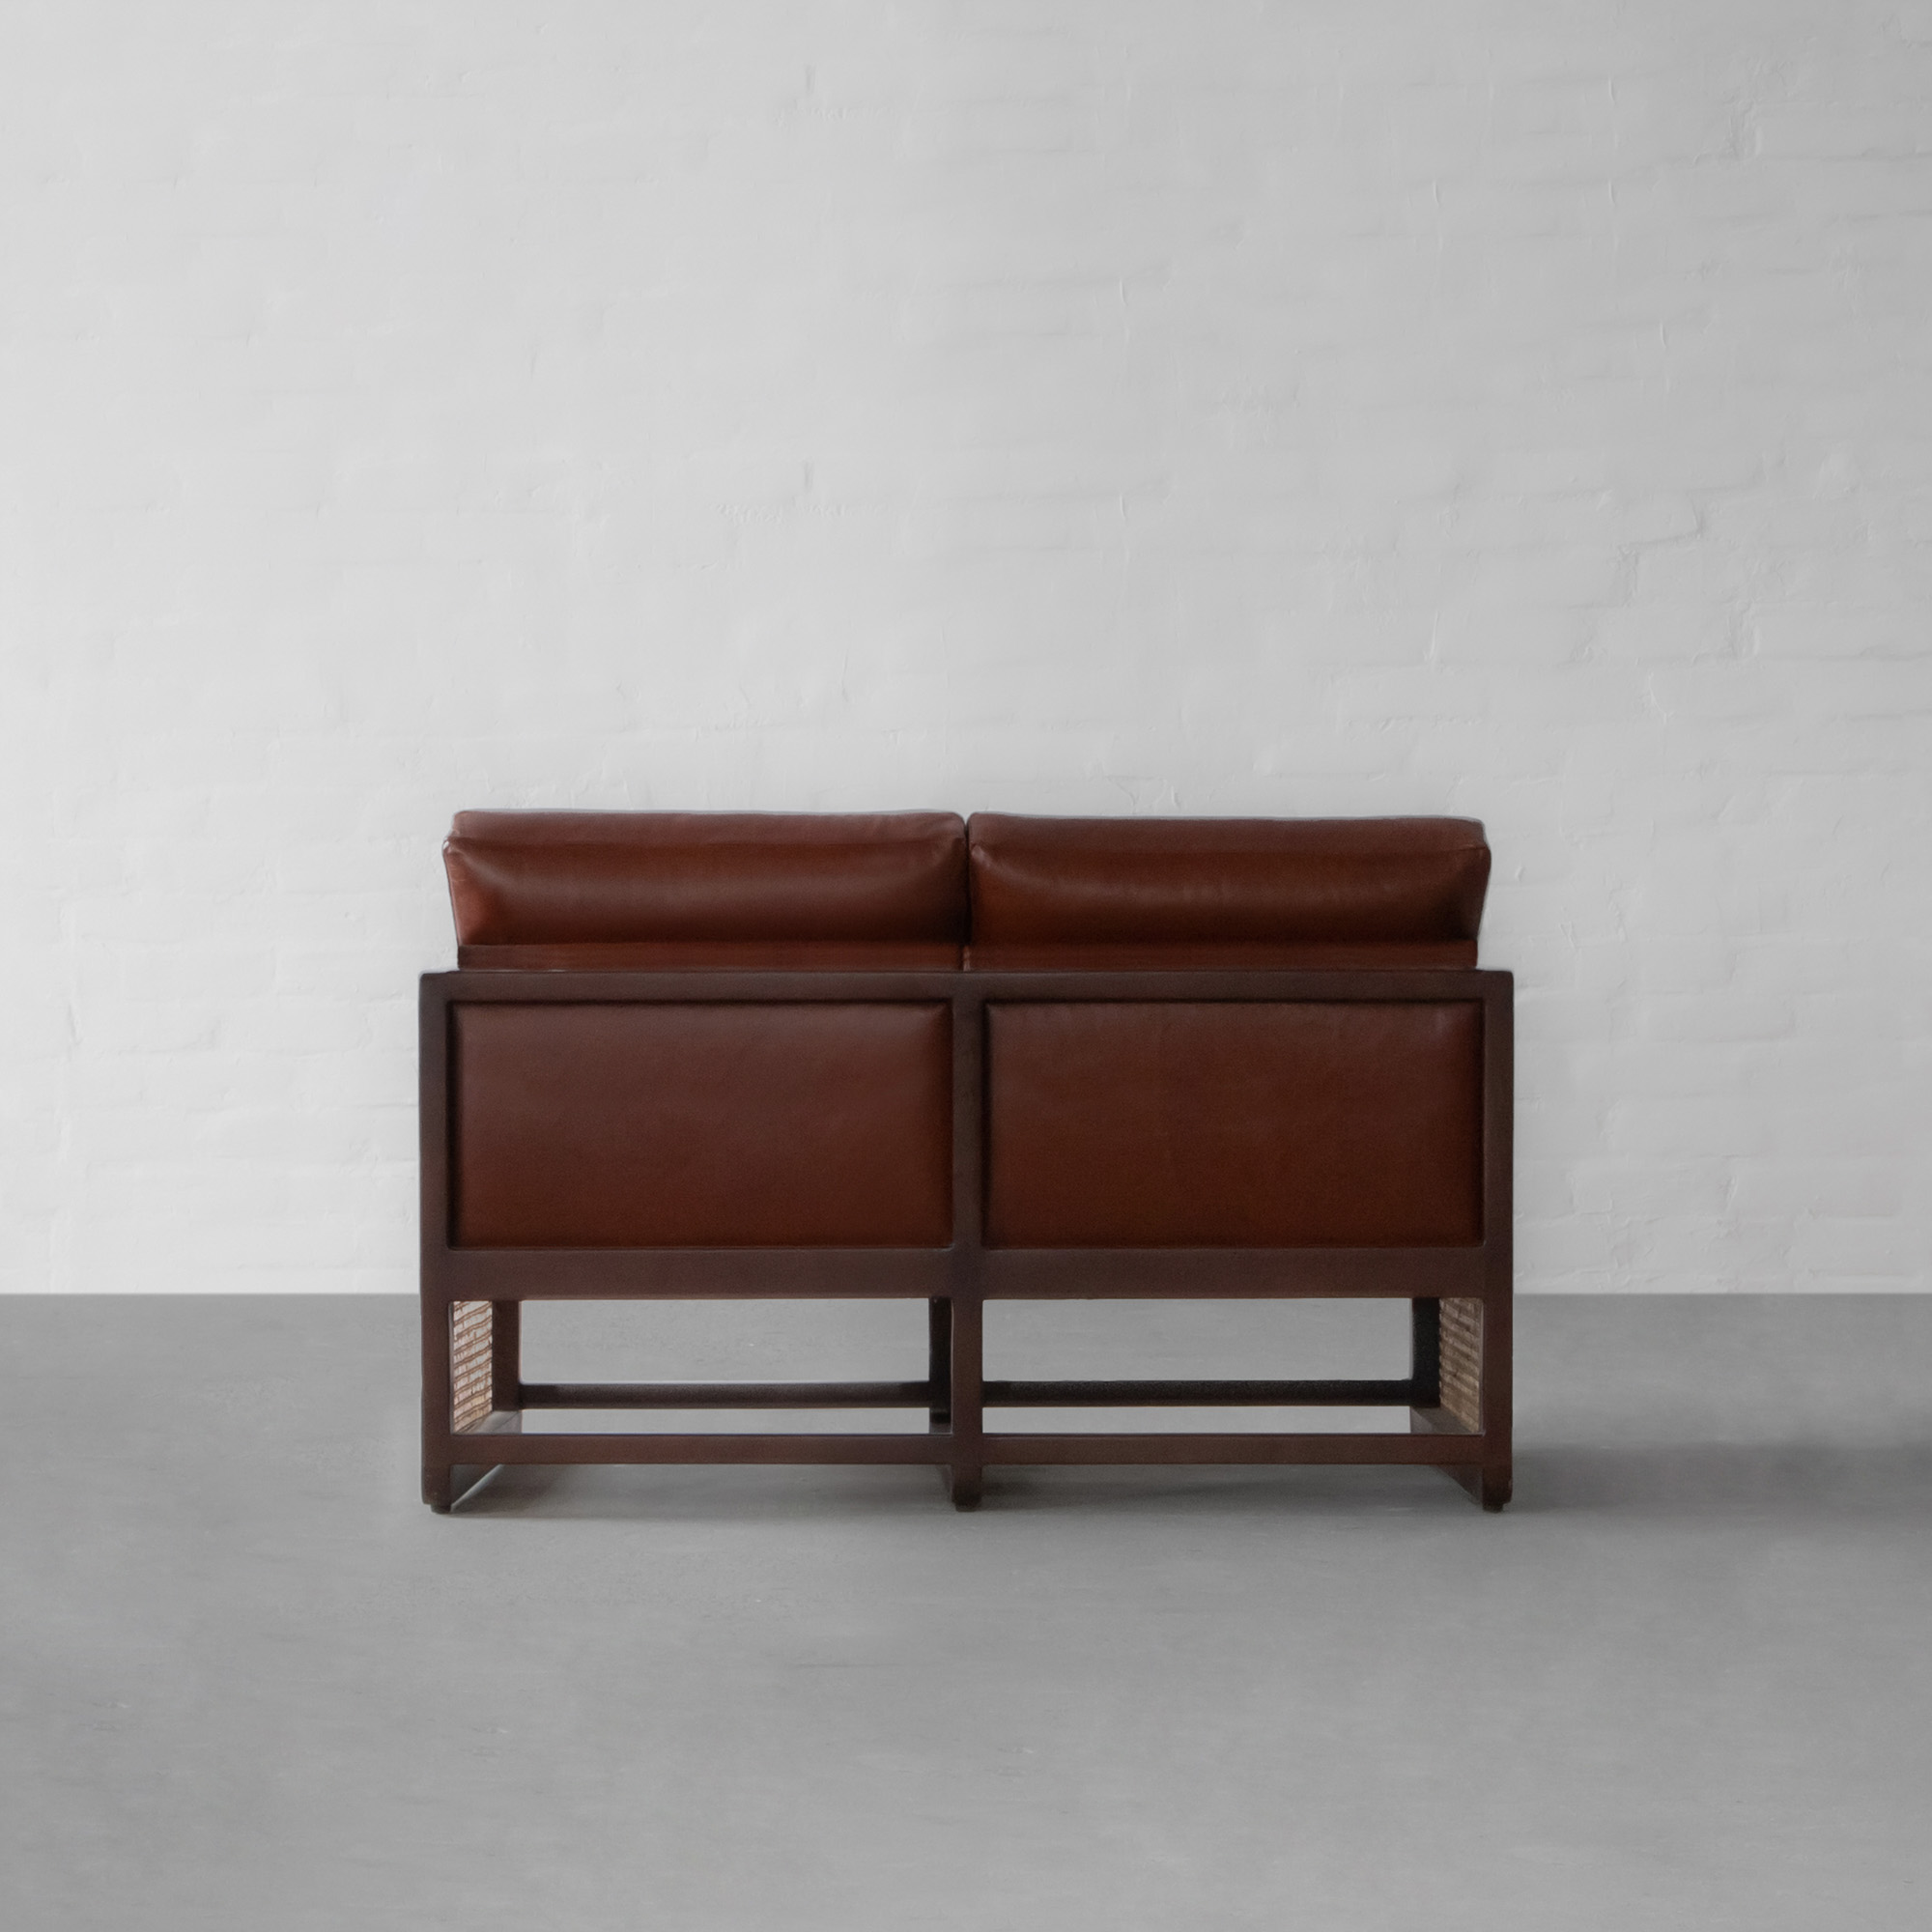 Southampton Rattan Leather Sofa